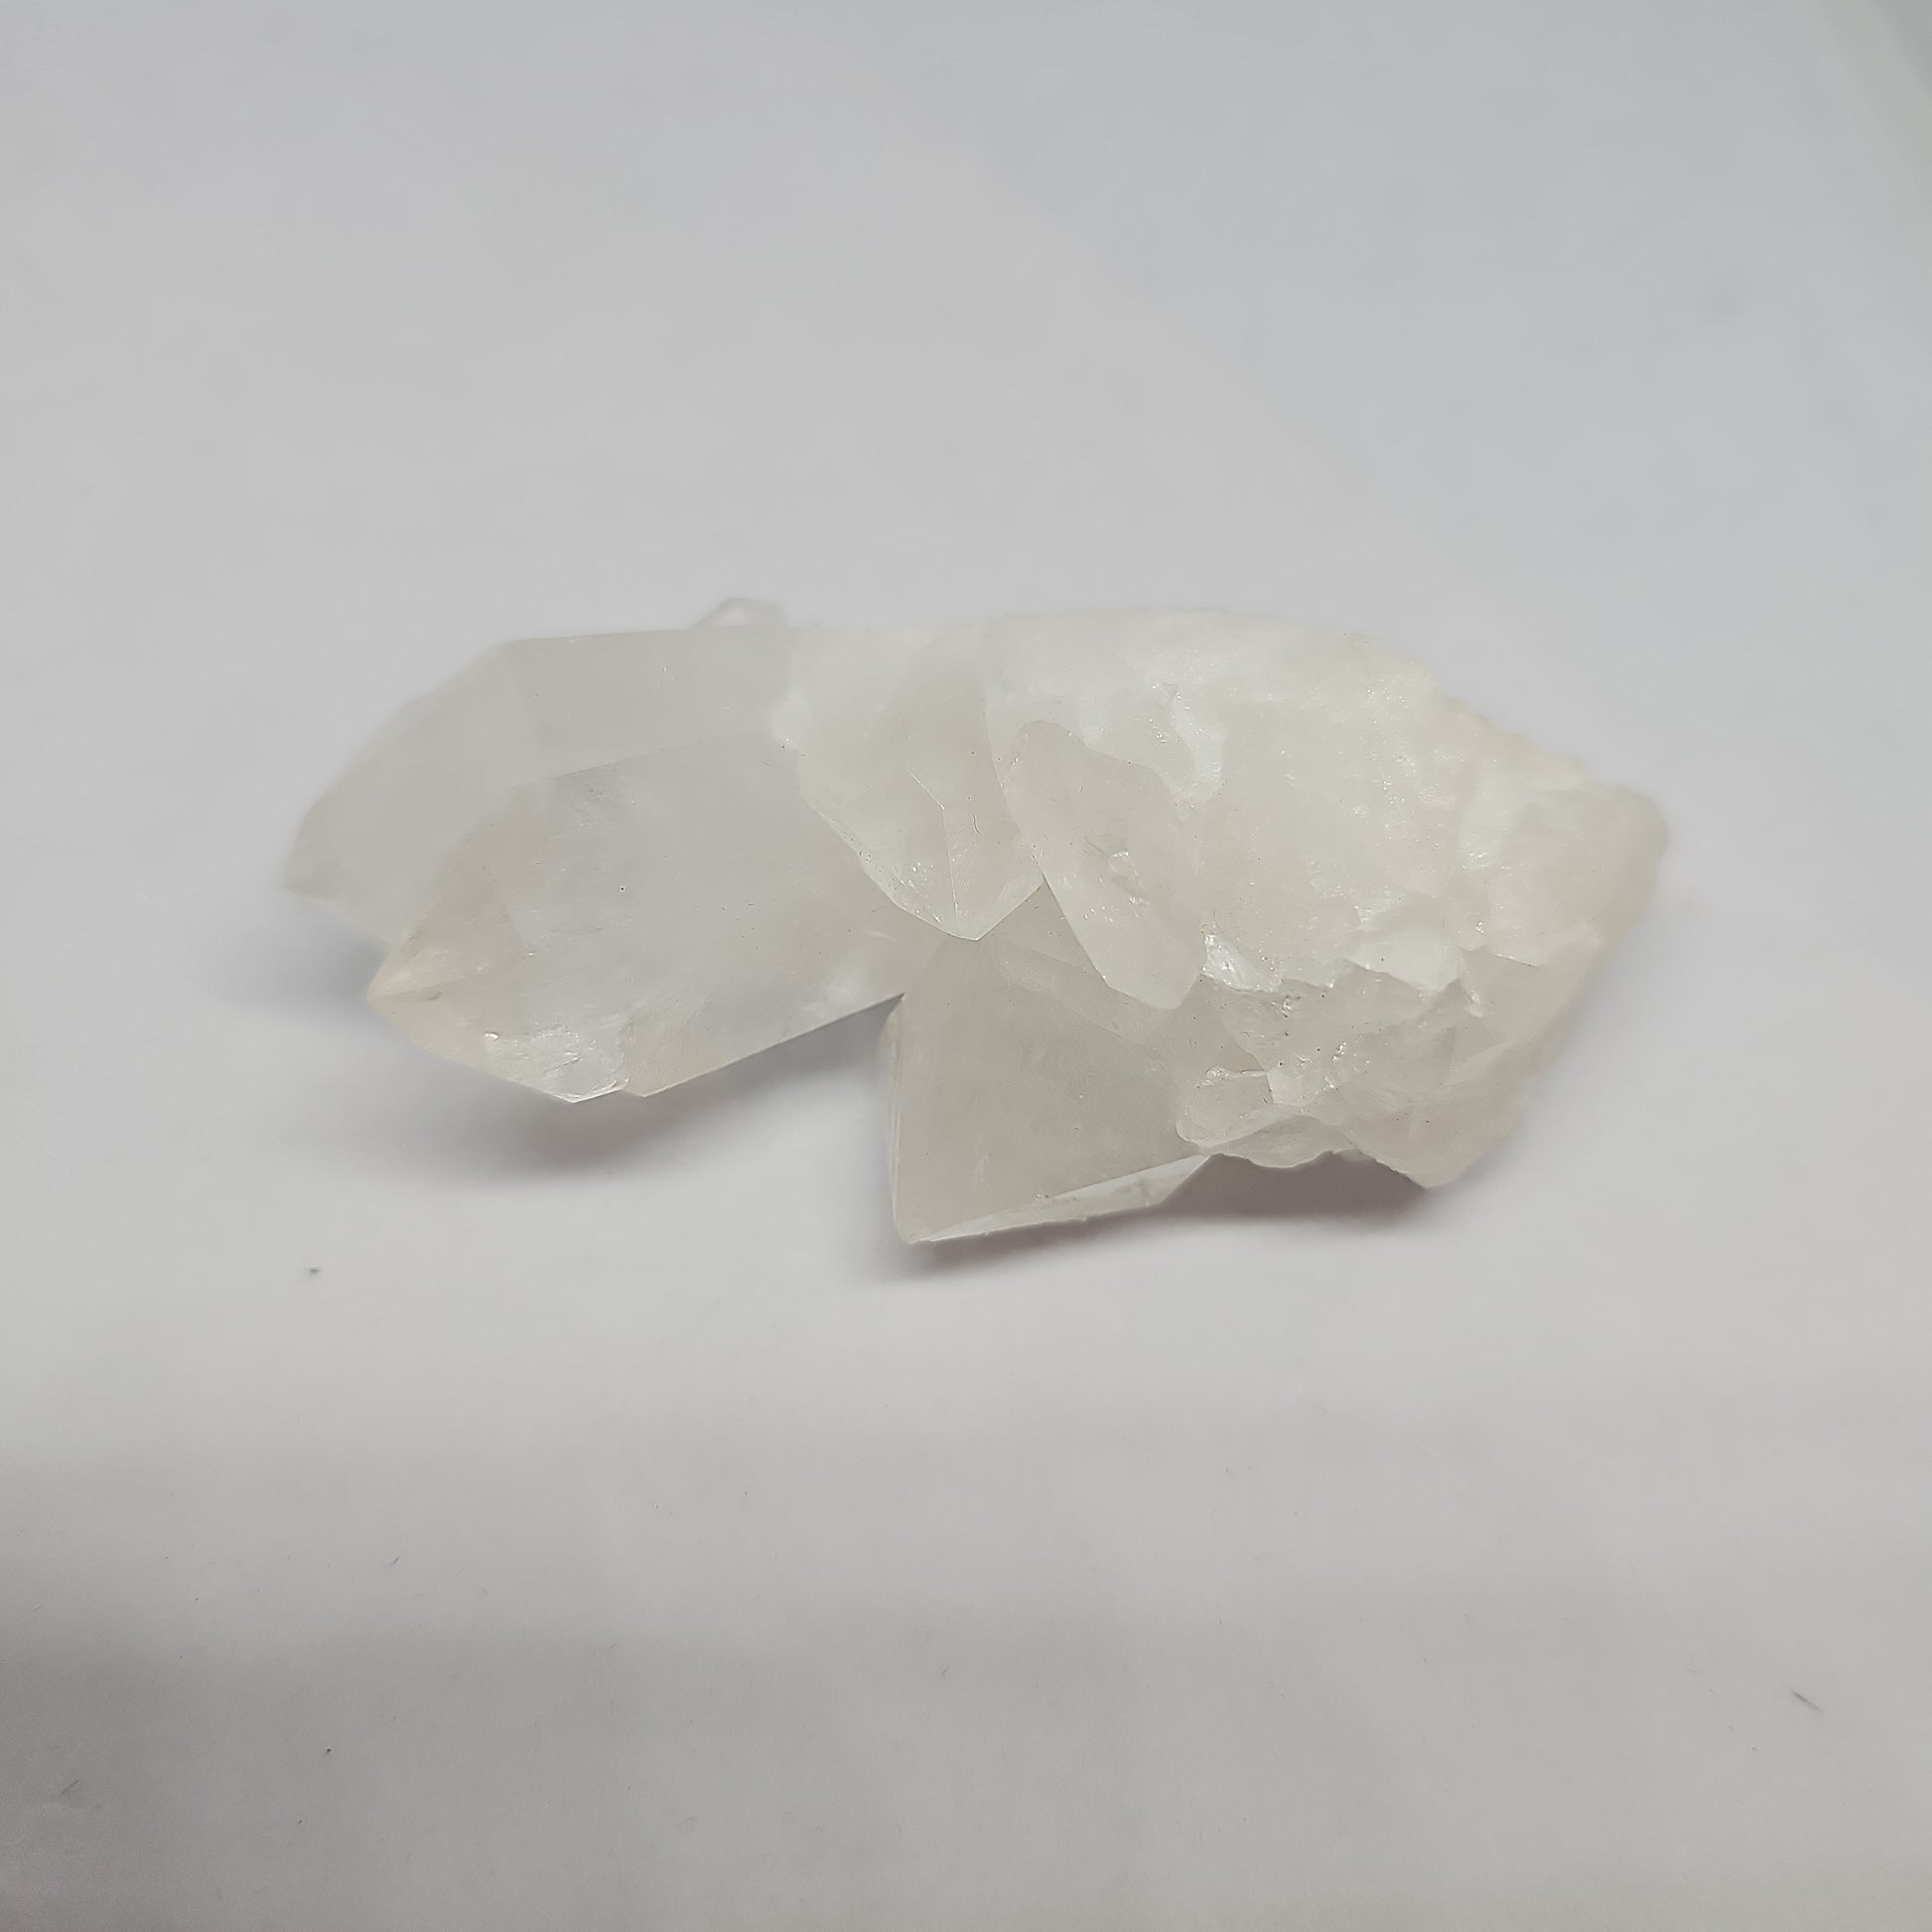 Clear quartz cluster - Rivendell Shop